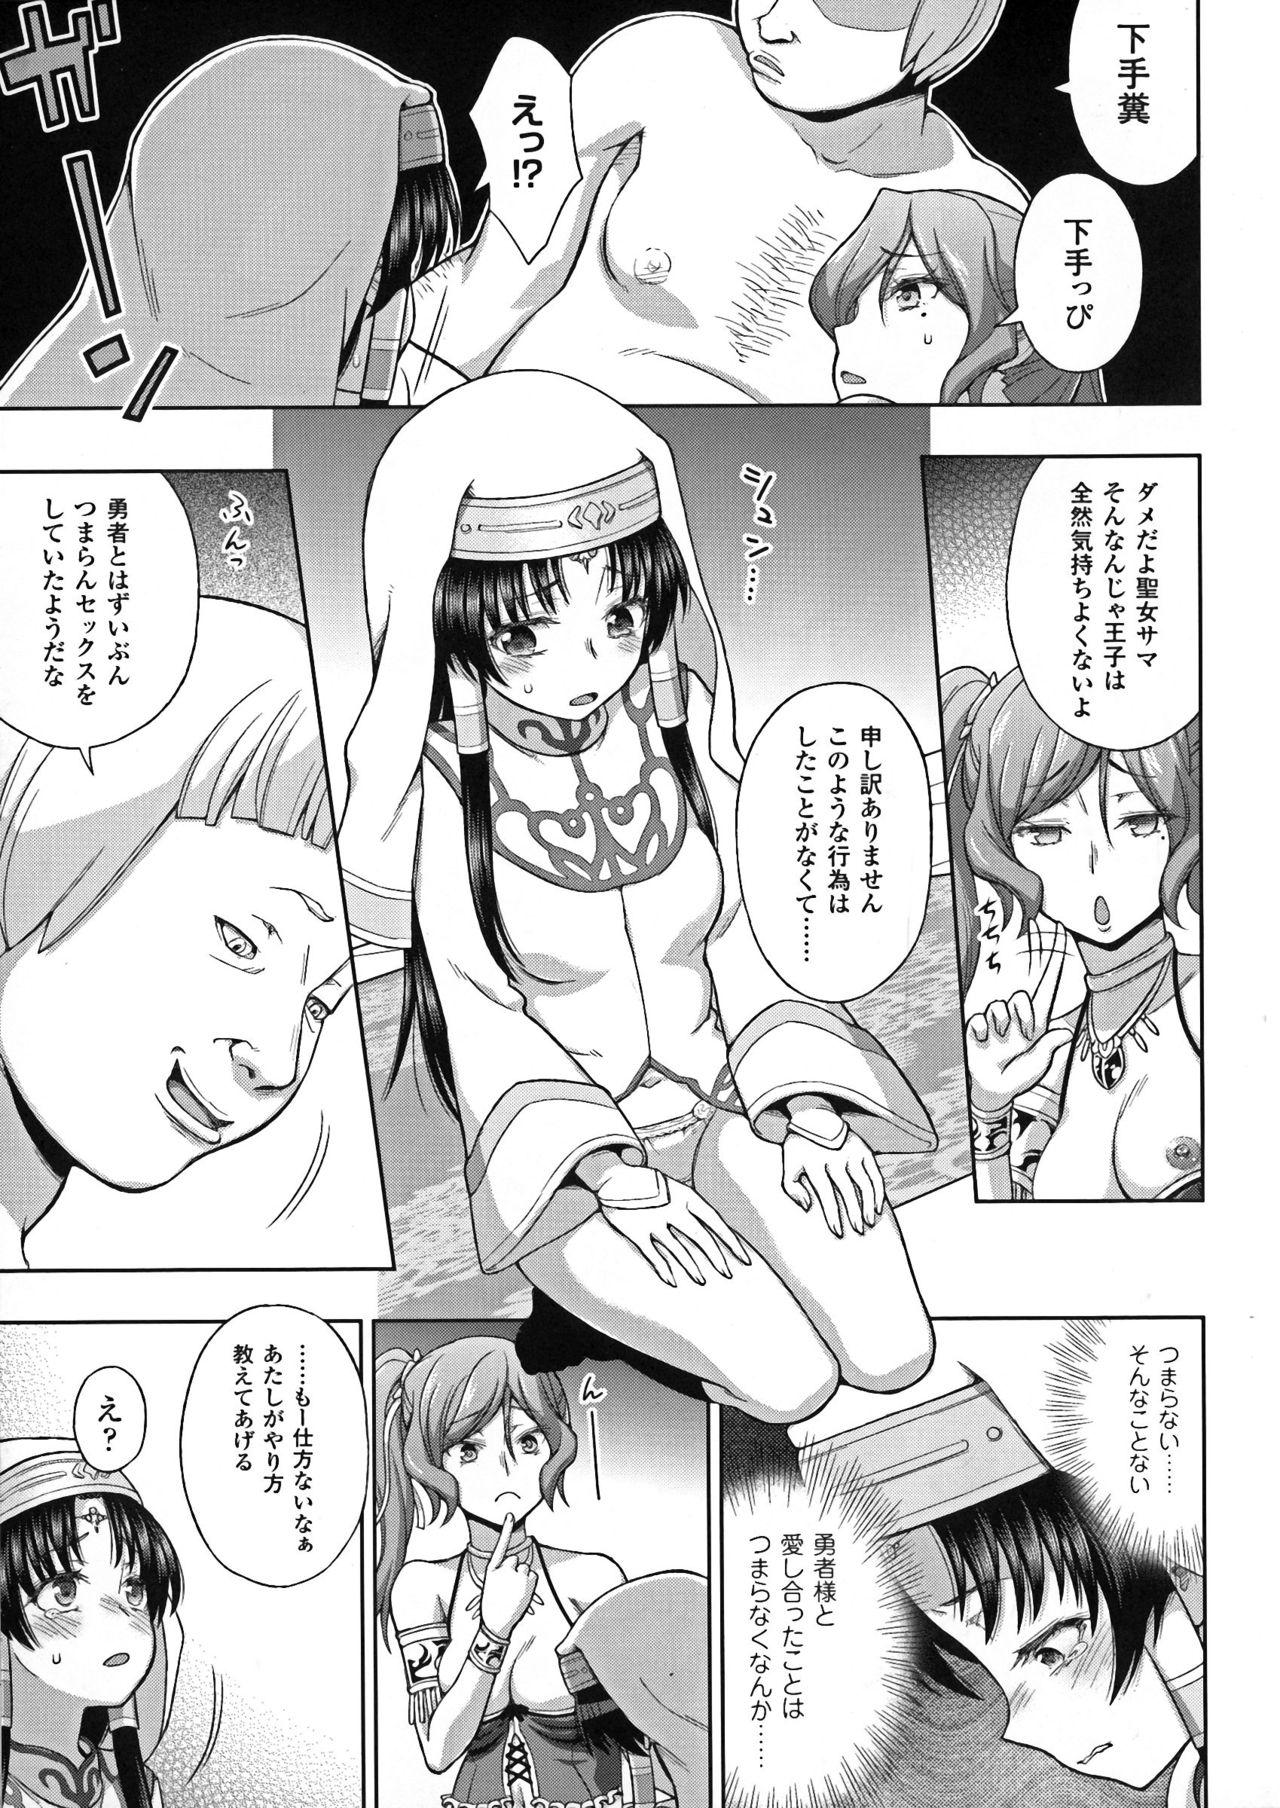 Seigi no Heroine Kangoku File DX Vol. 7 36